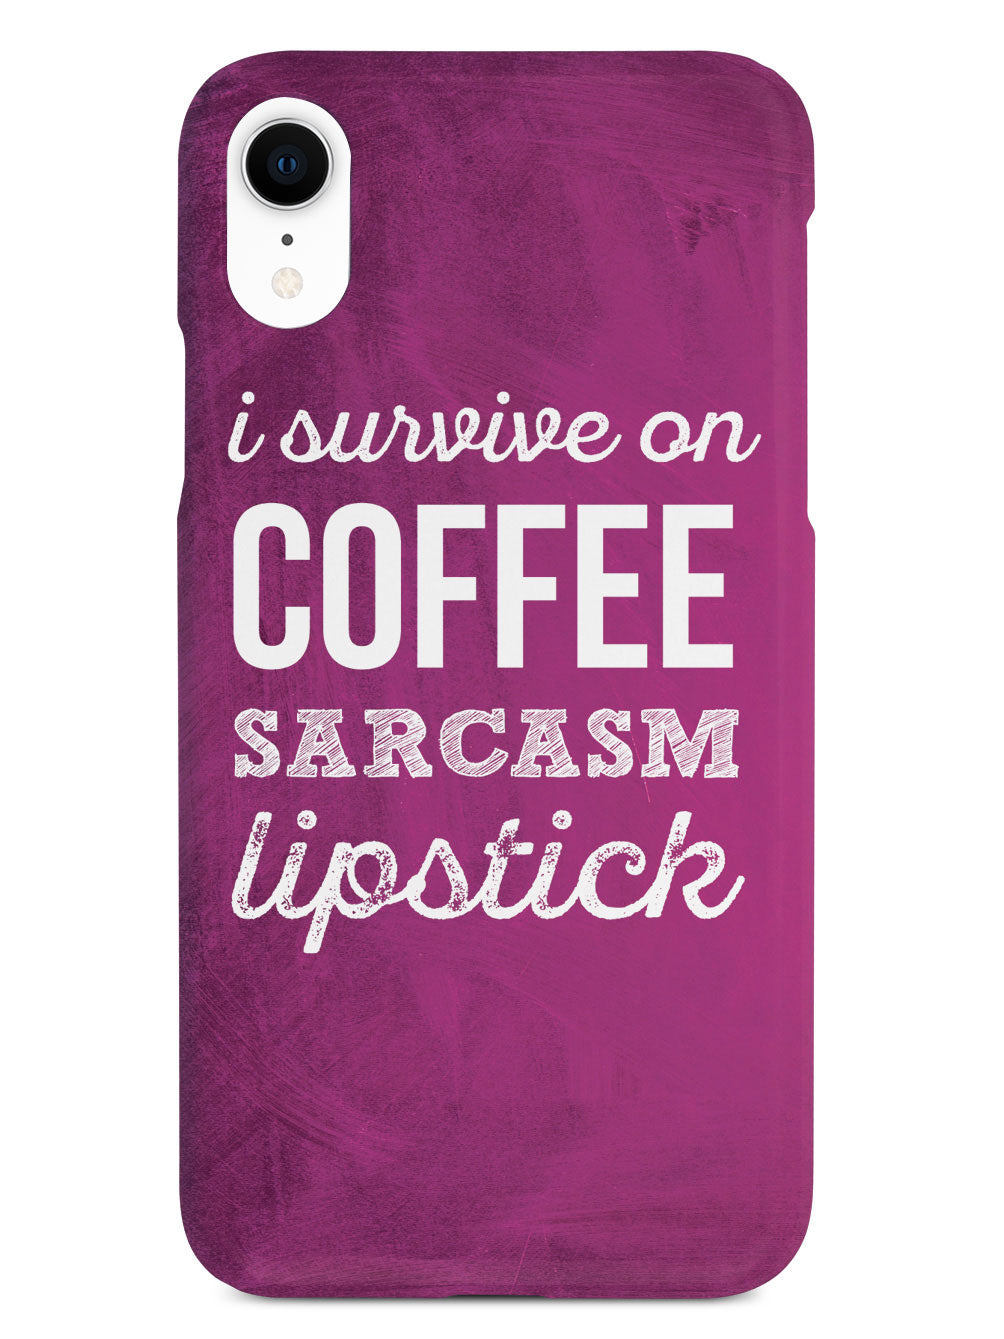 Coffee, Sarcasm, Lipstick - Makeup Case